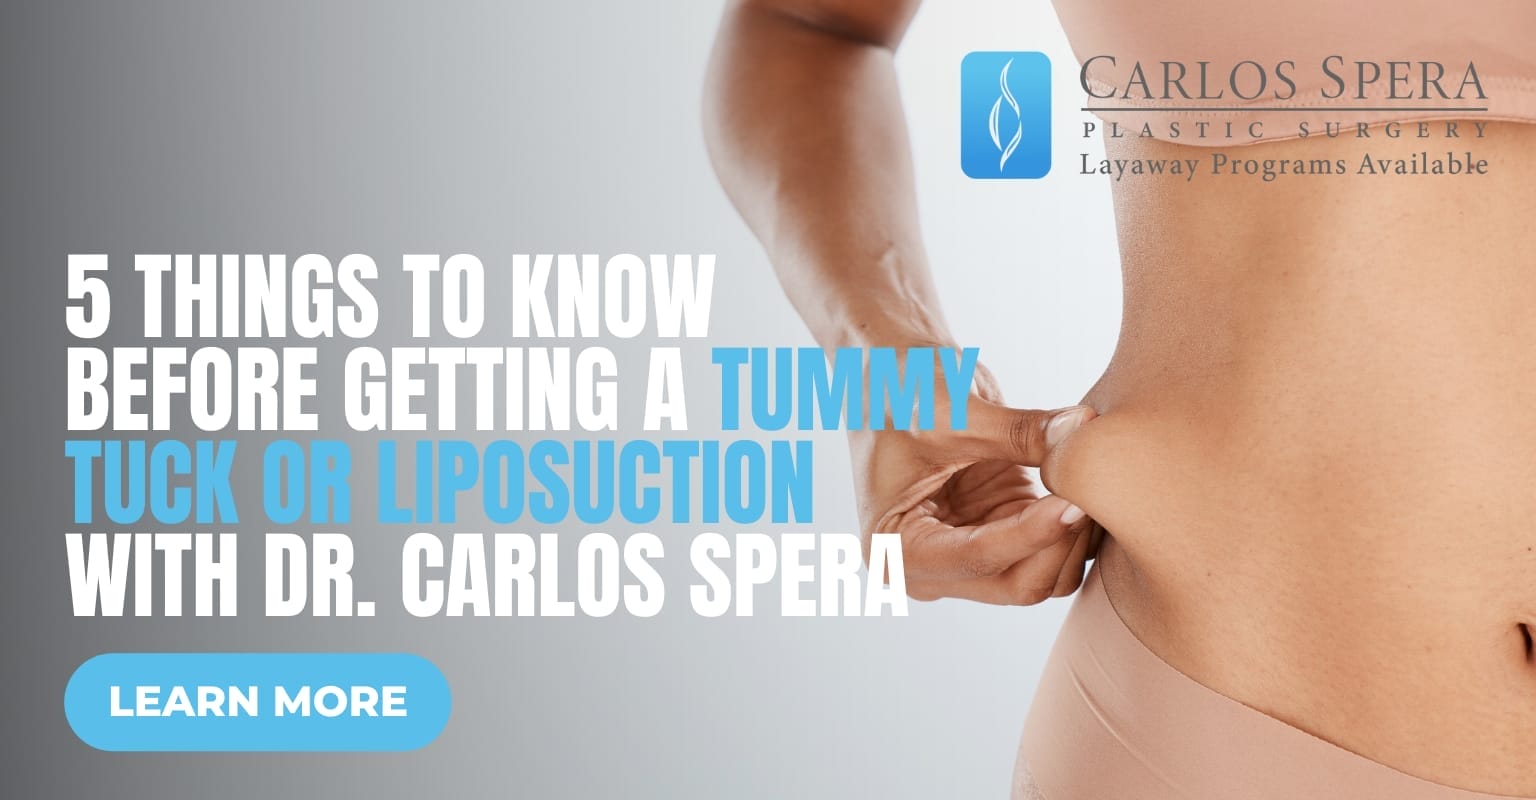 Tummy Tuck or Liposuction?